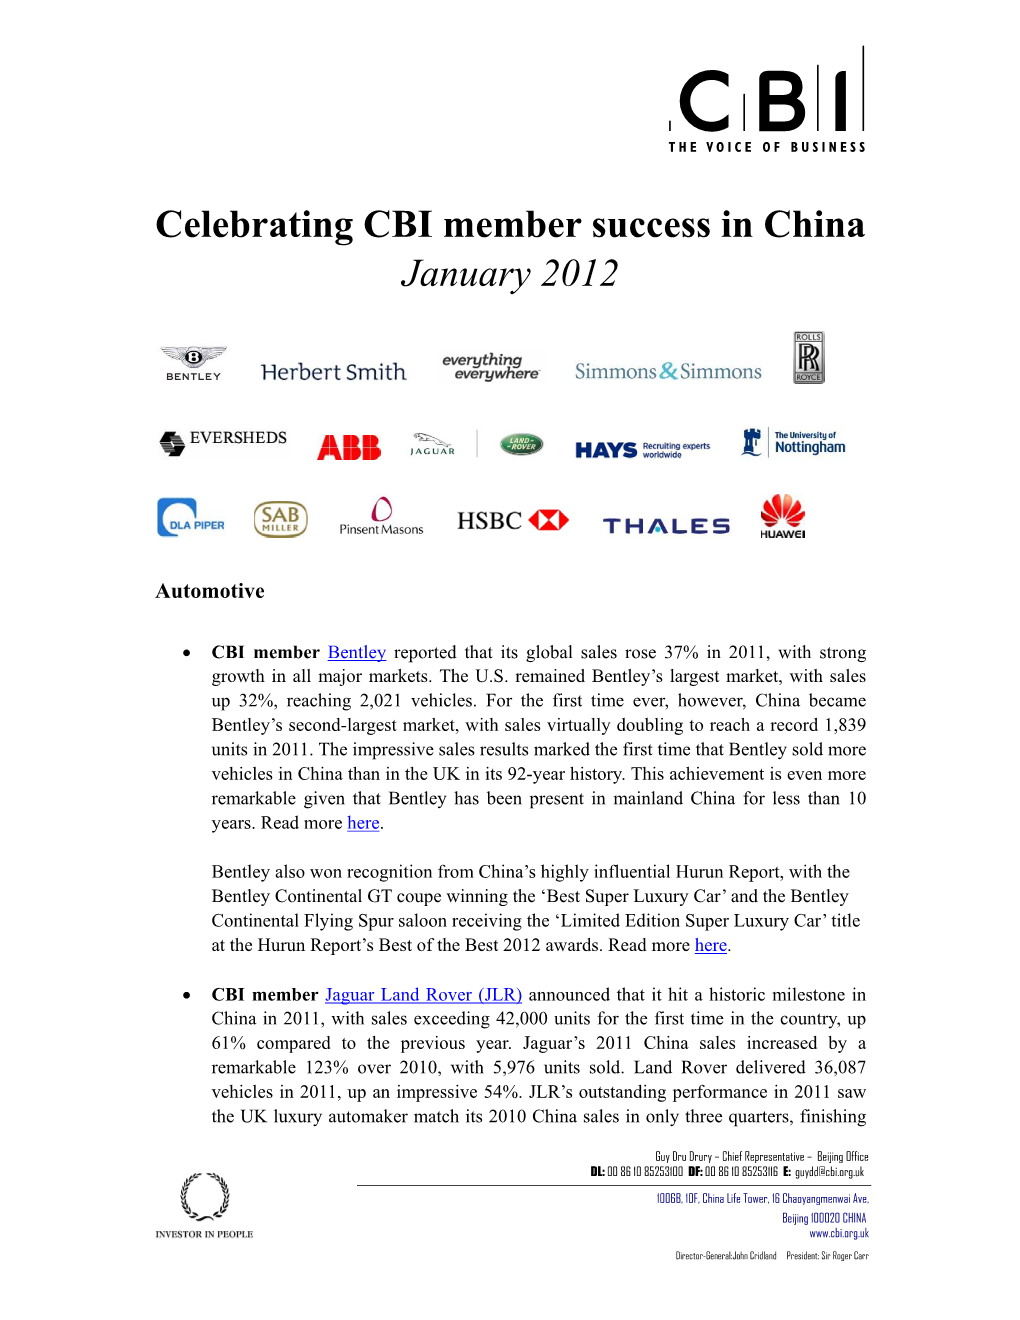 Celebrating CBI Member Success in China January 2012